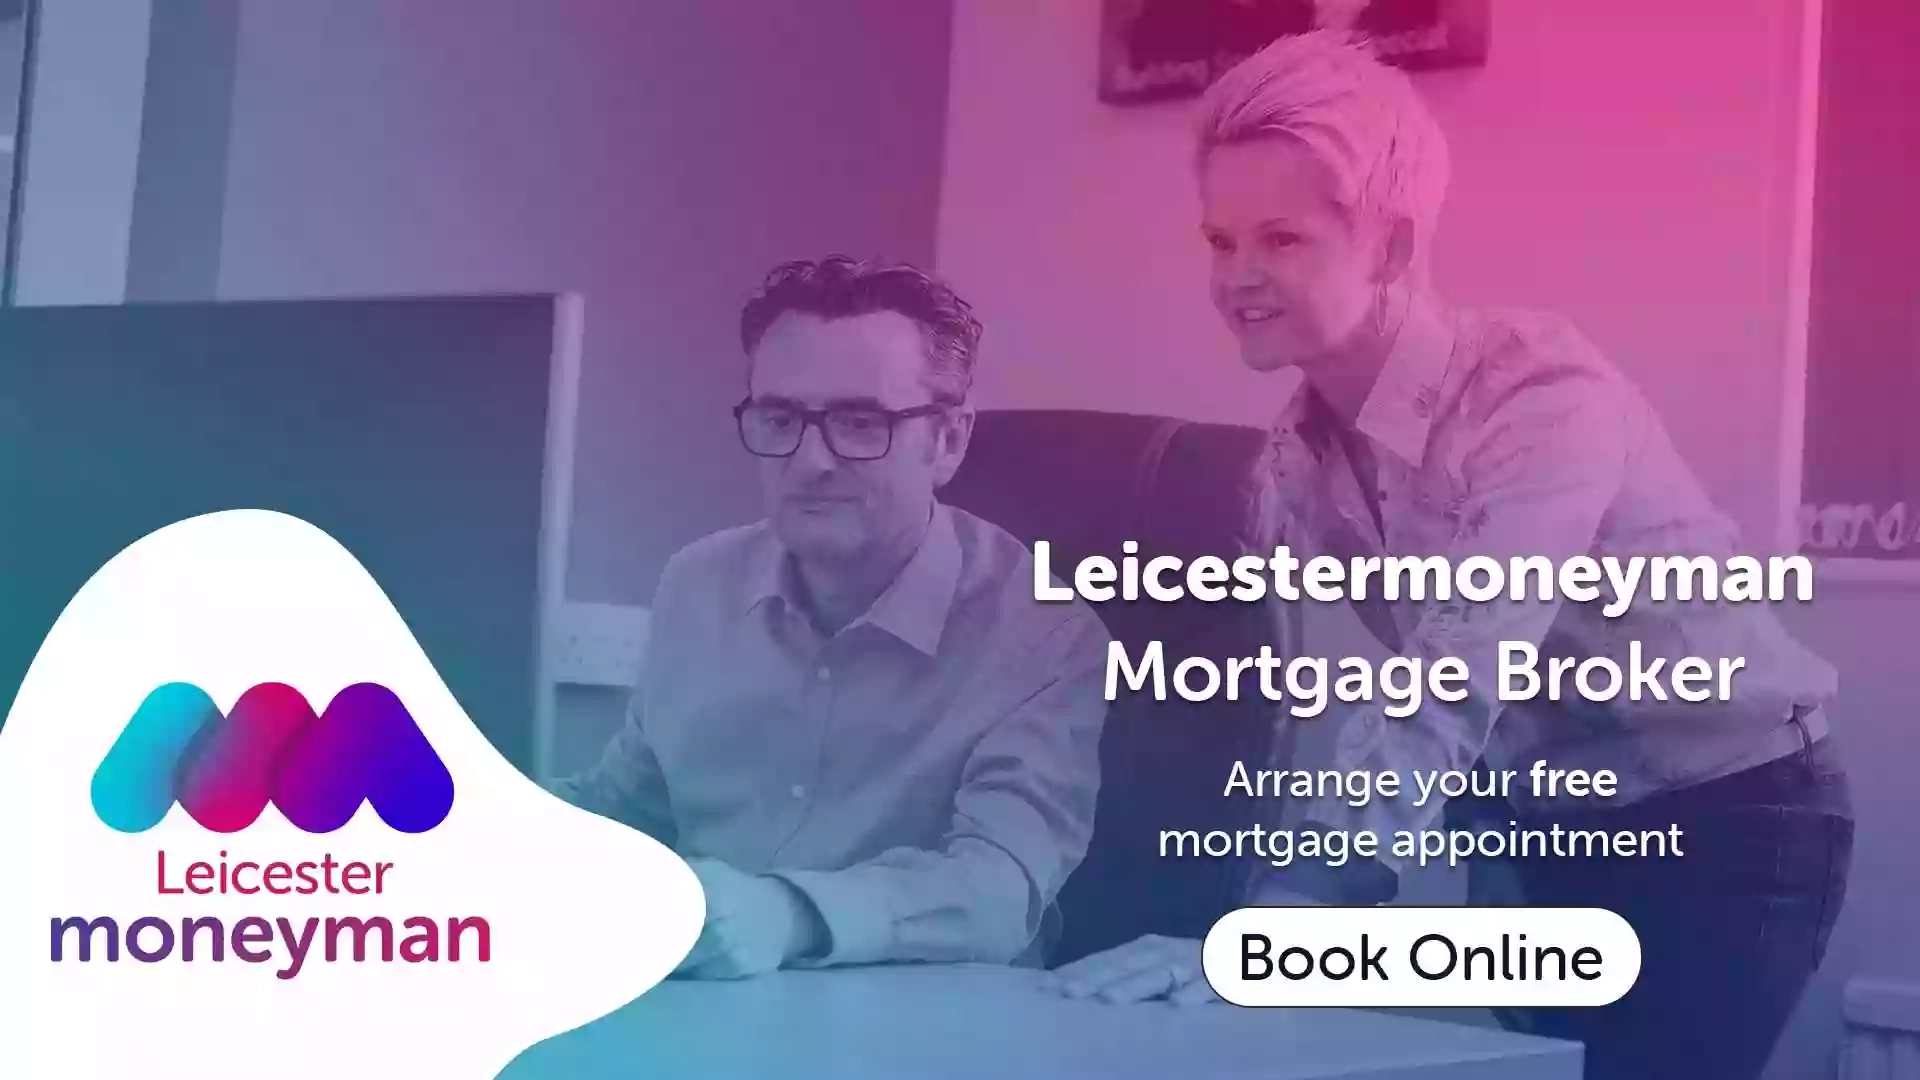 Leicestermoneyman - Mortgage Broker